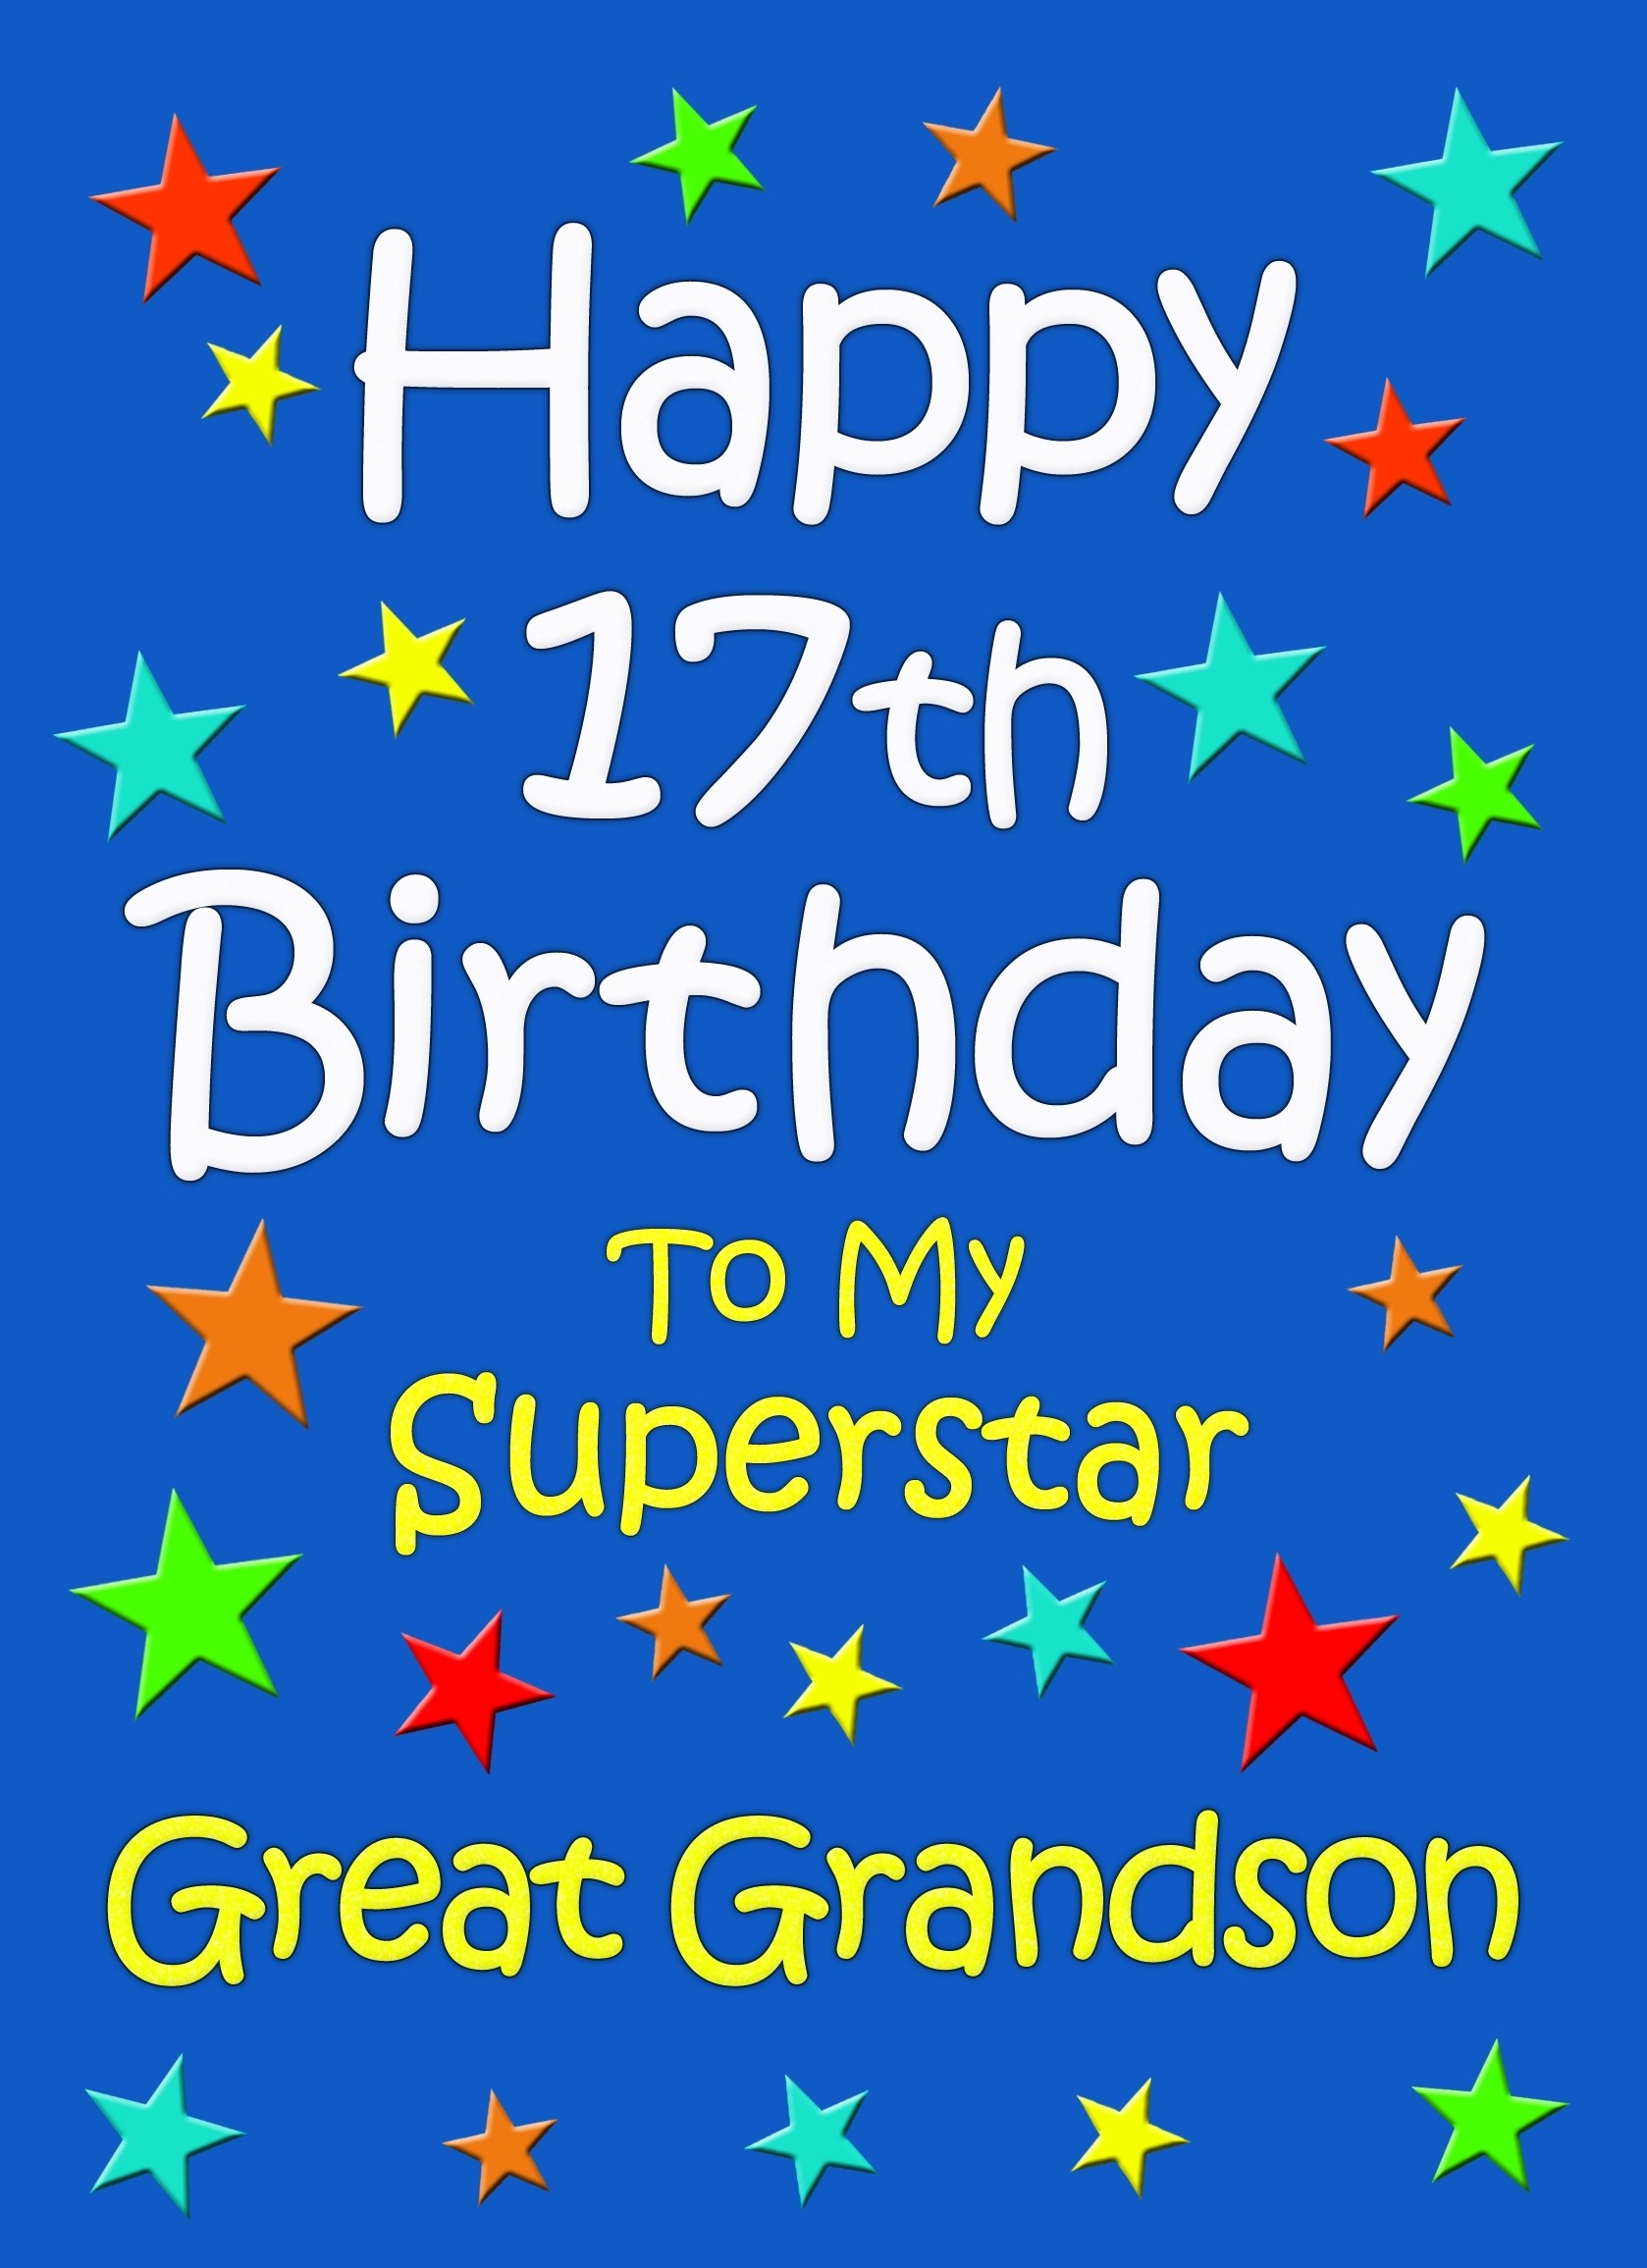 Great Grandson 17th Birthday Card (Blue)